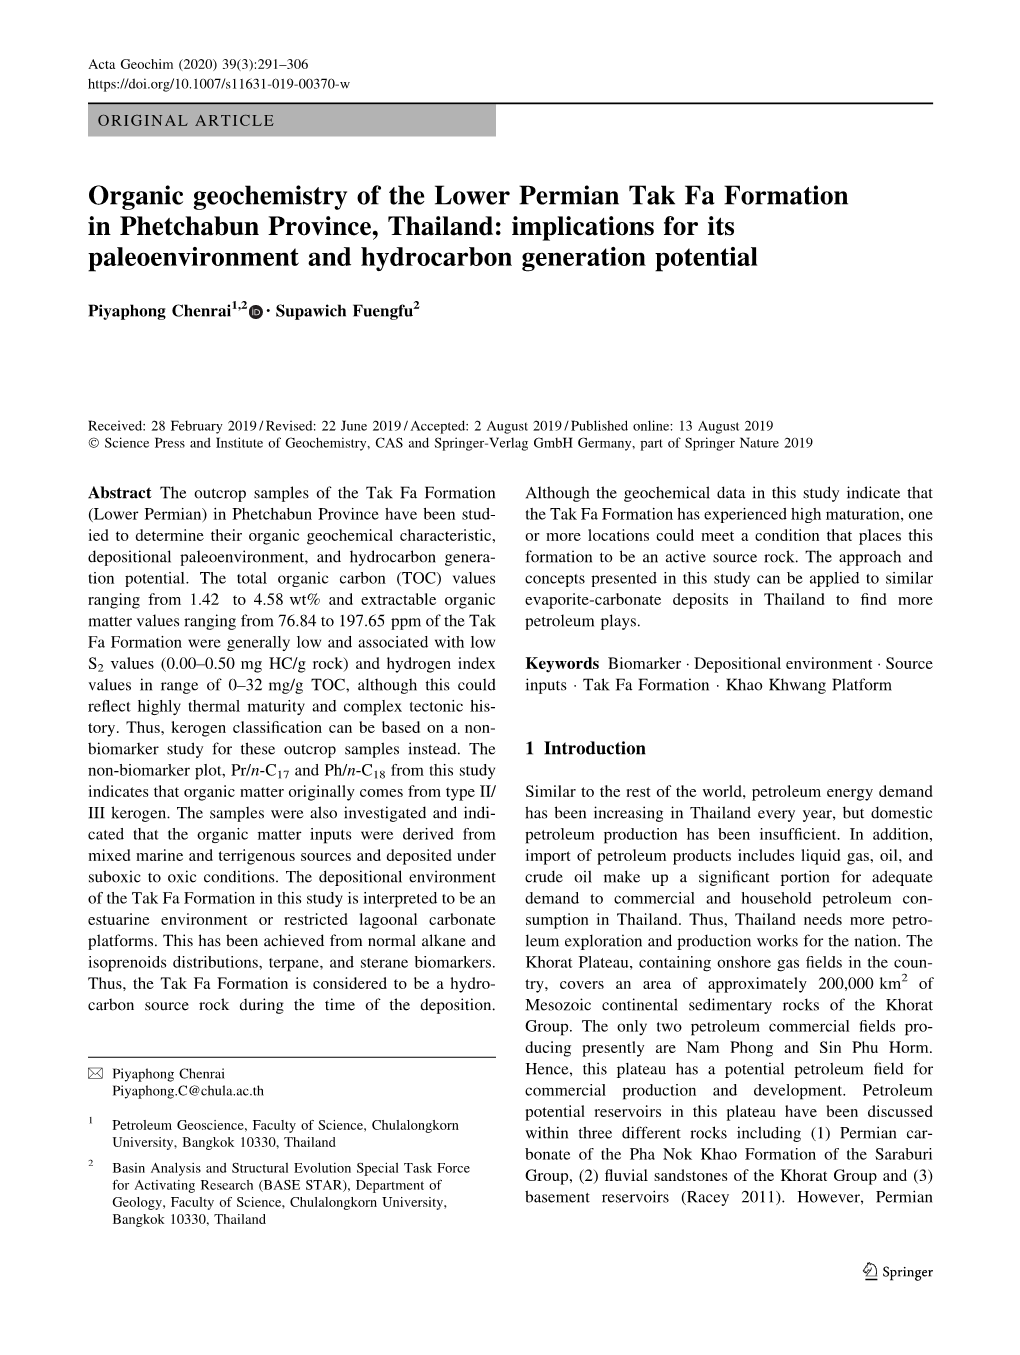 Organic Geochemistry of the Lower Permian Tak Fa Formation In